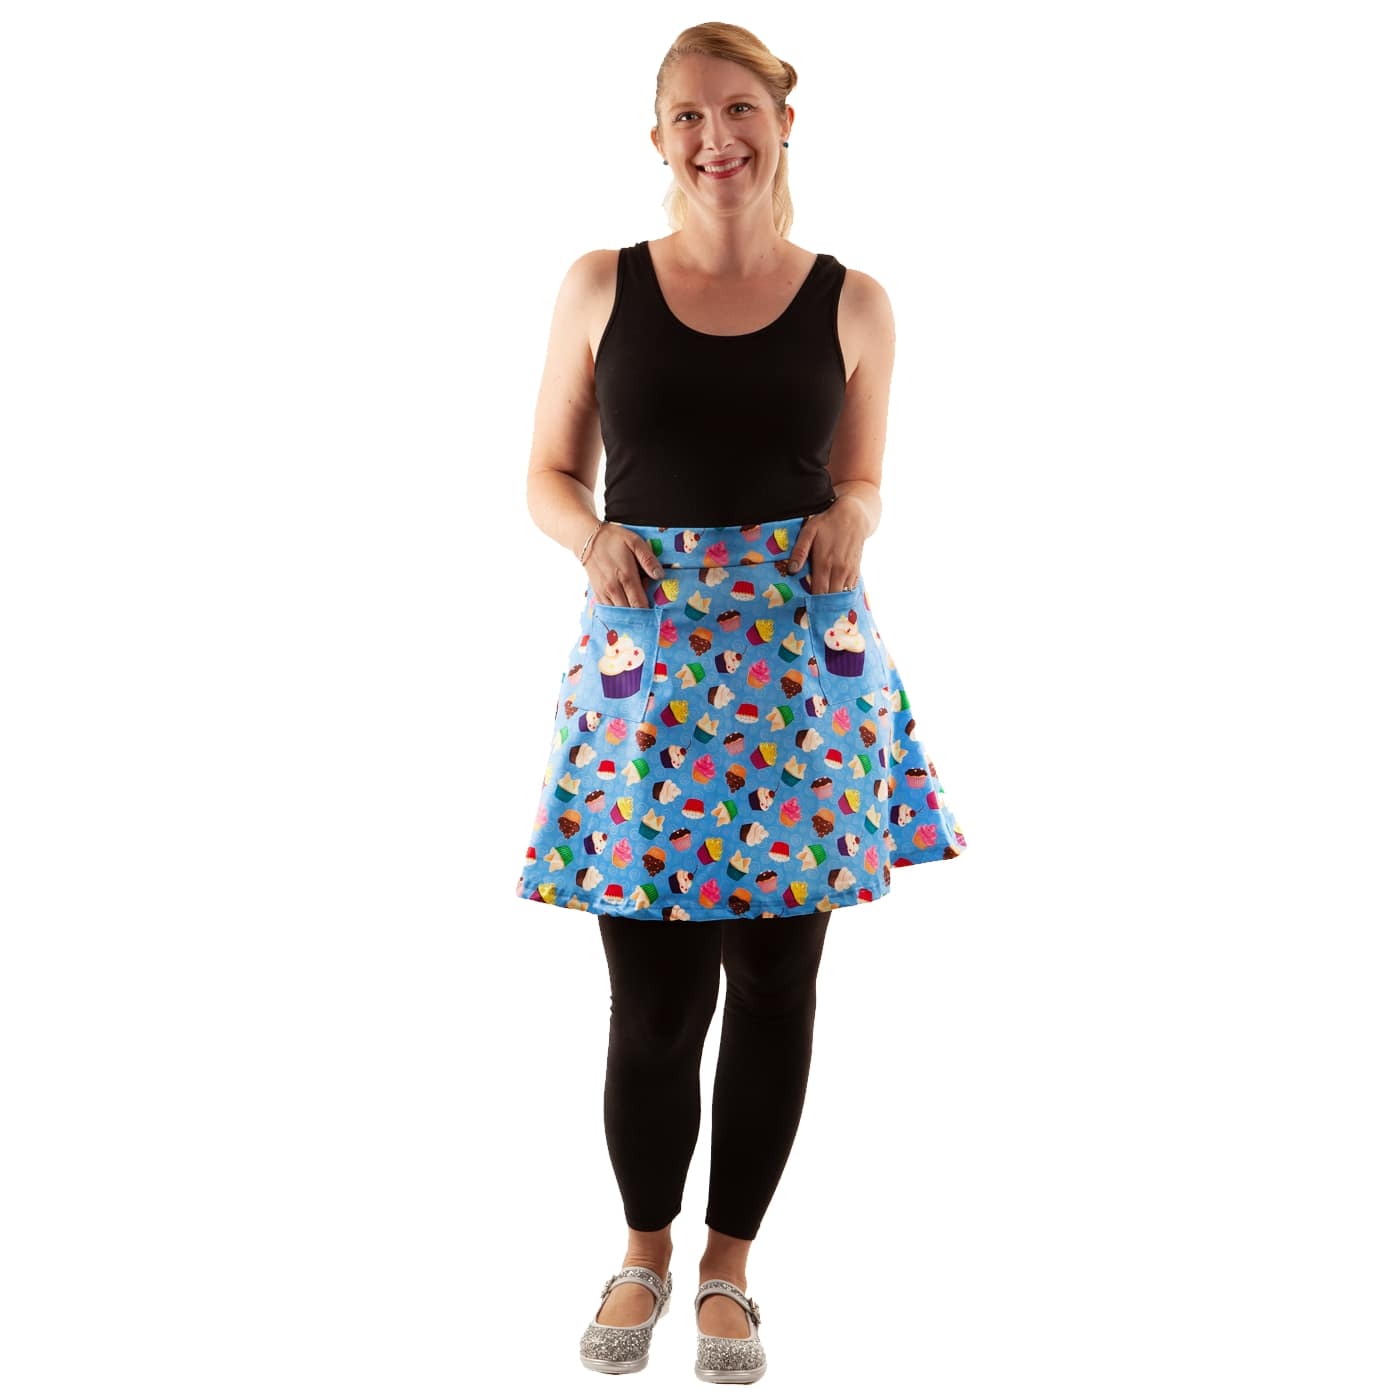 Patty Cakes Short Skirt by RainbowsAndFairies.com (Cupcakes - High Tea - Cake - Skirt With Pockets - Aline Skirt - Cute Flirty - Vintage Inspired) - SKU: CL_SHORT_PATTY_ORG - Pic 03